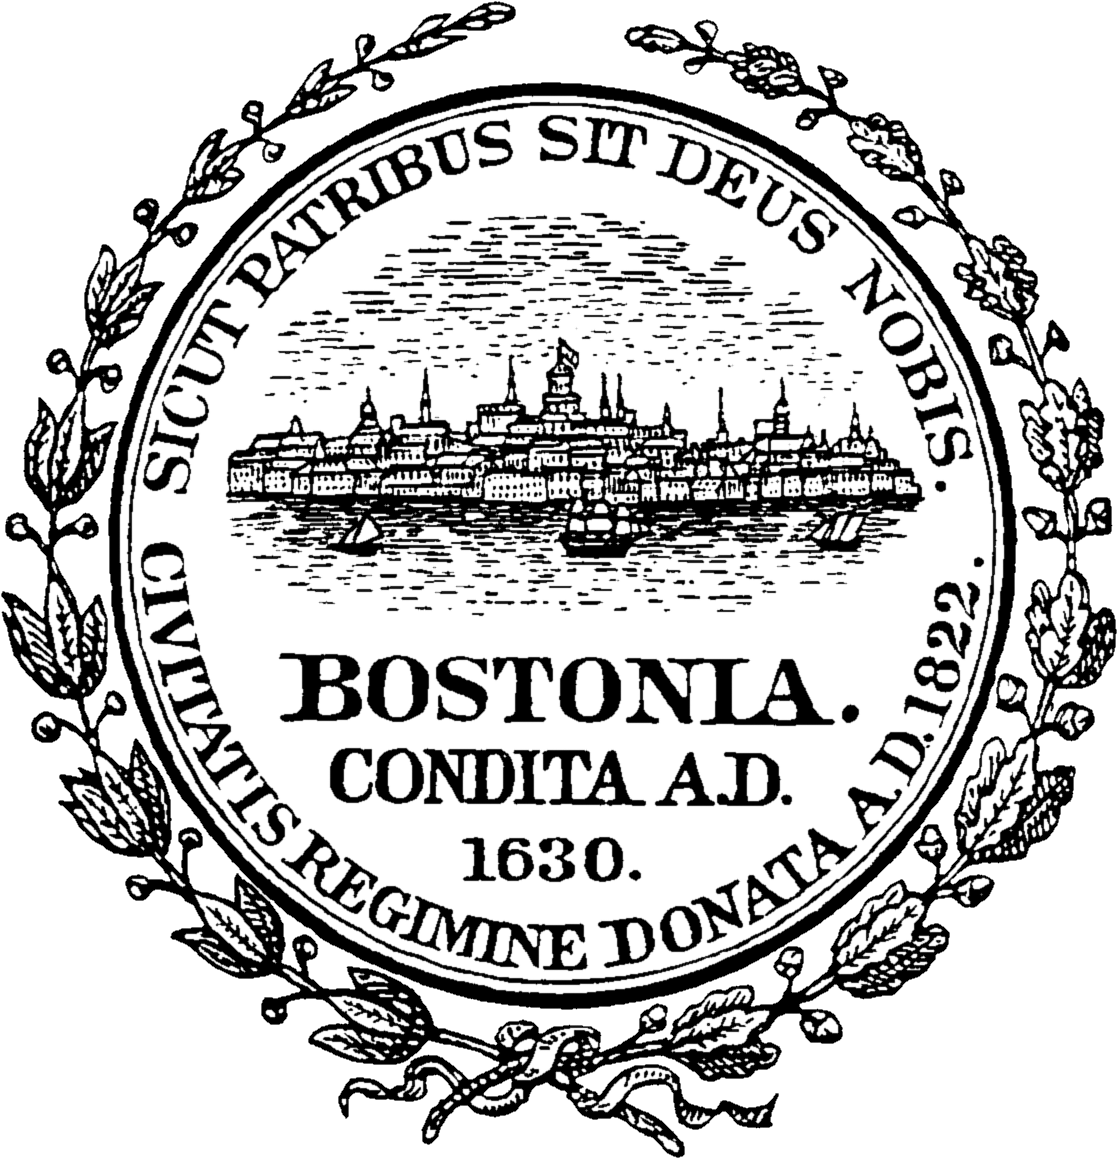 Boston logo and seal